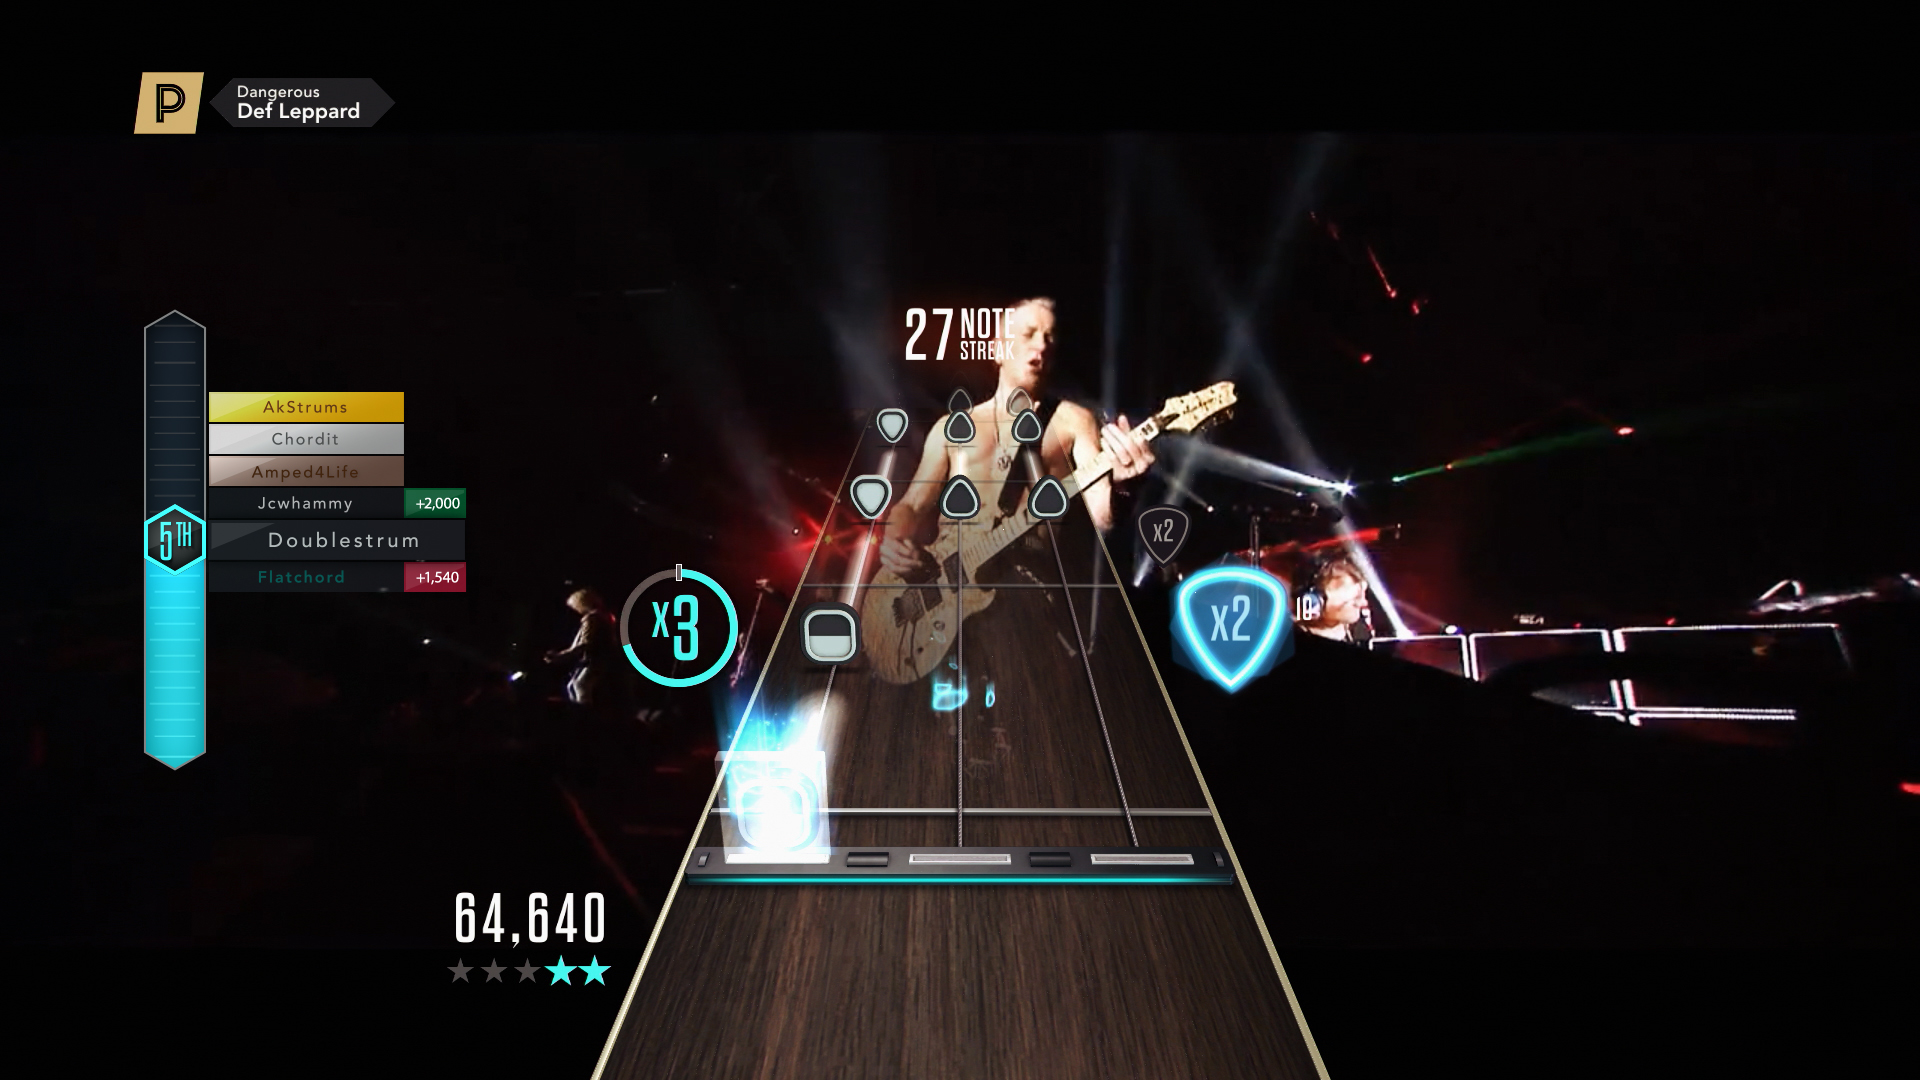 Def Leppard’s 'Dangerous' Guitar Hero Live